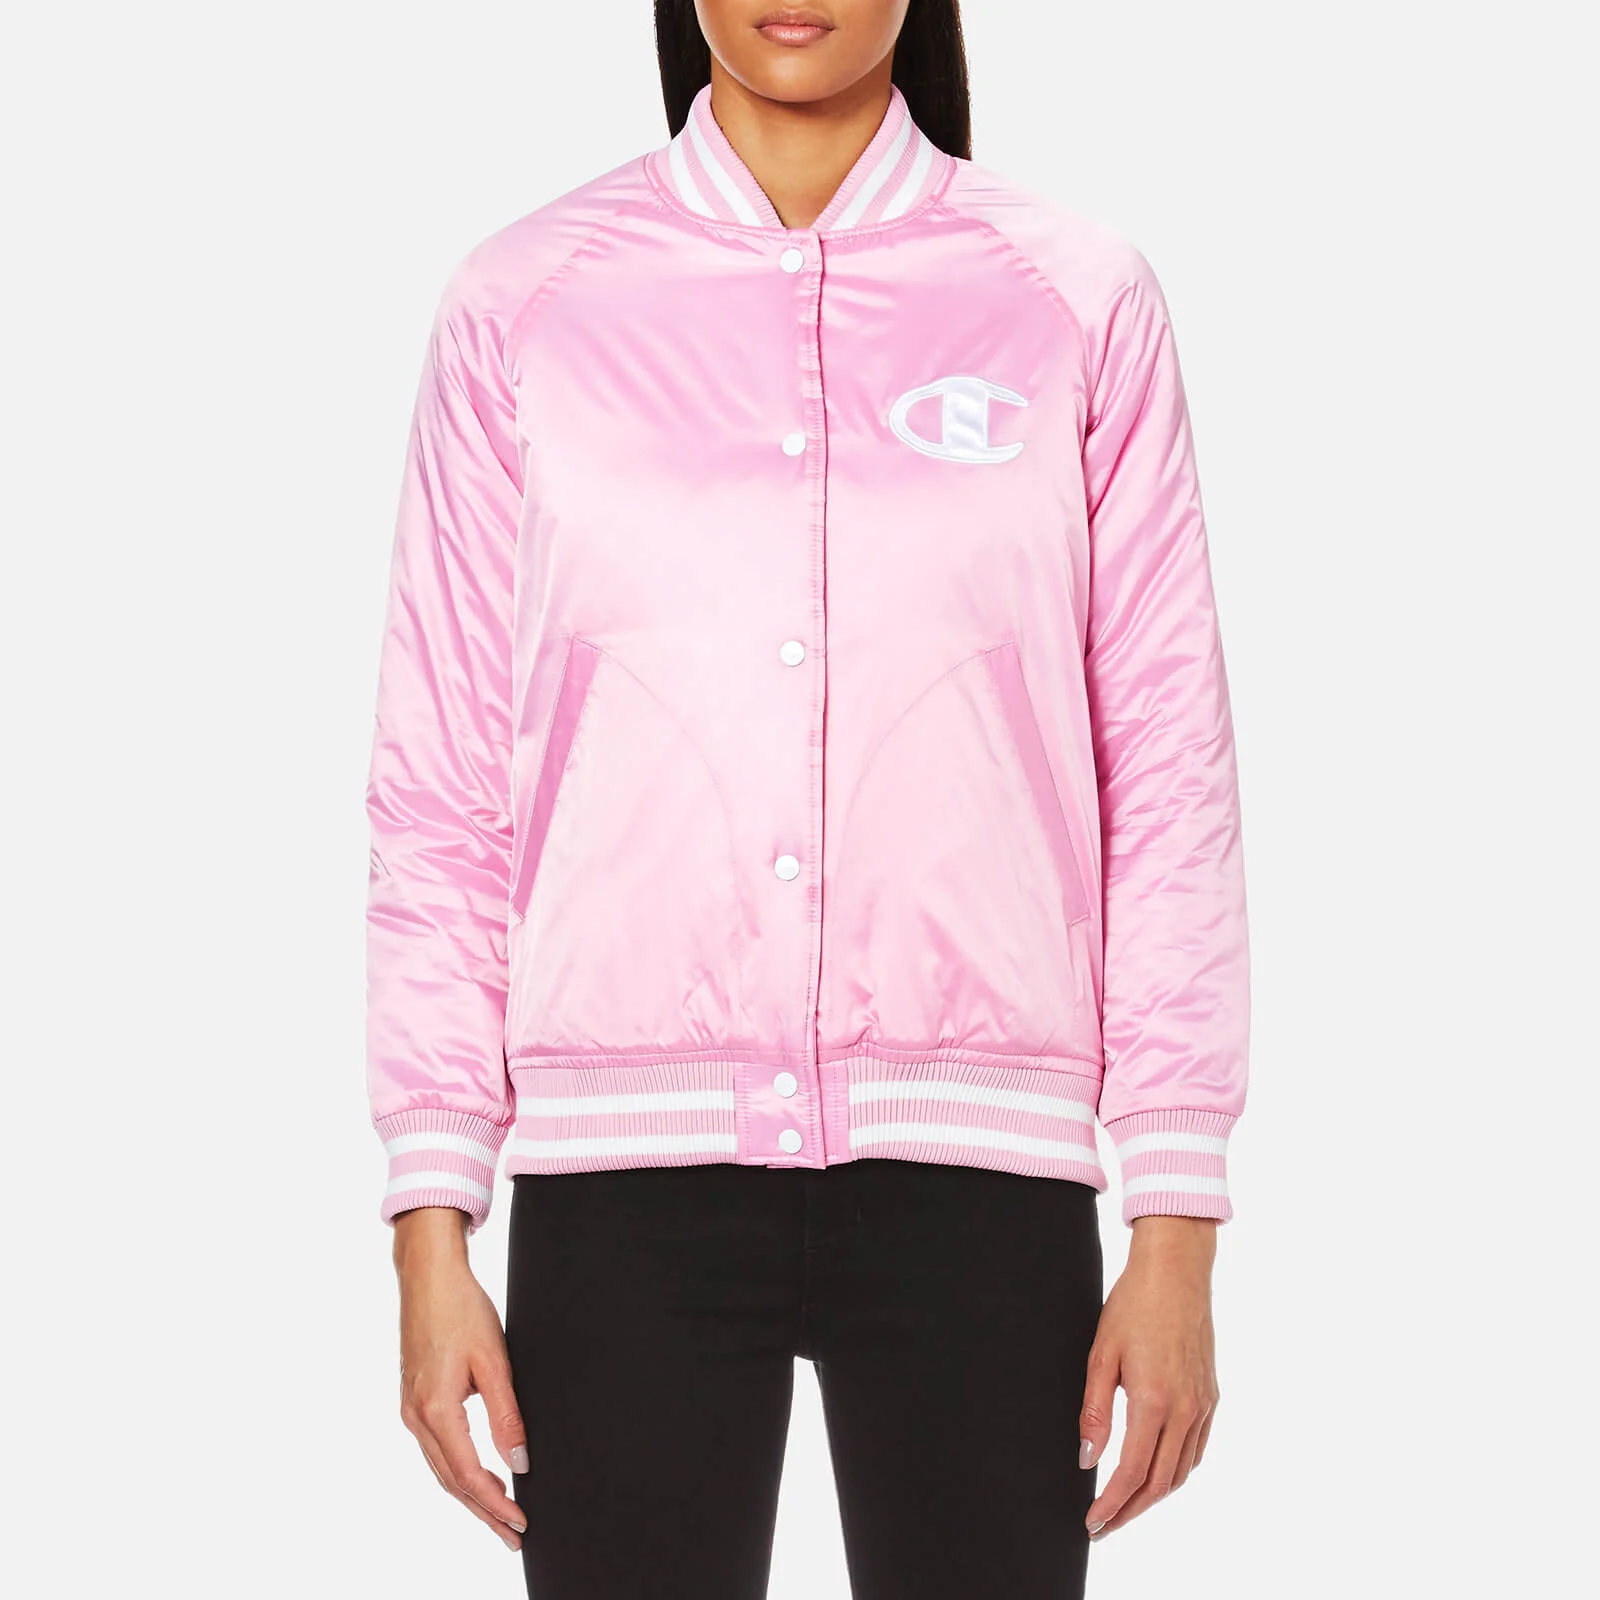 Champion Women's Bomber Jacket - Pink Image 1